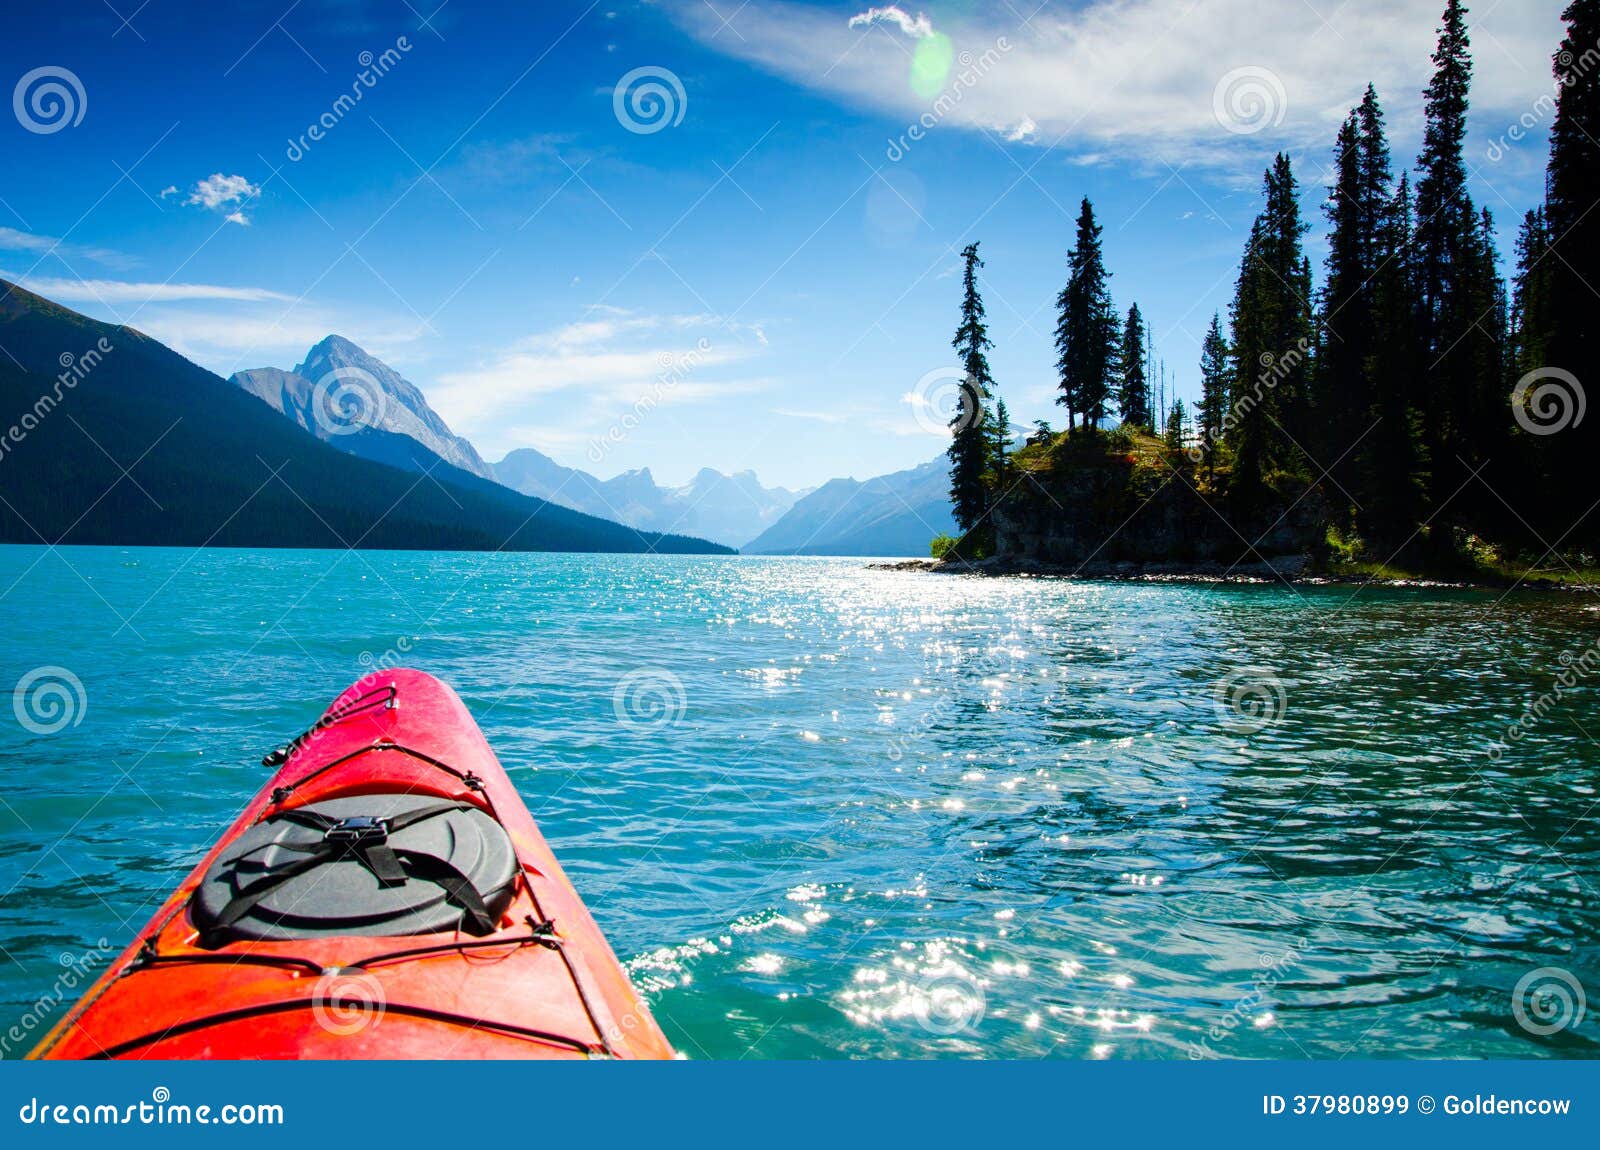 canoe in rocky mountains